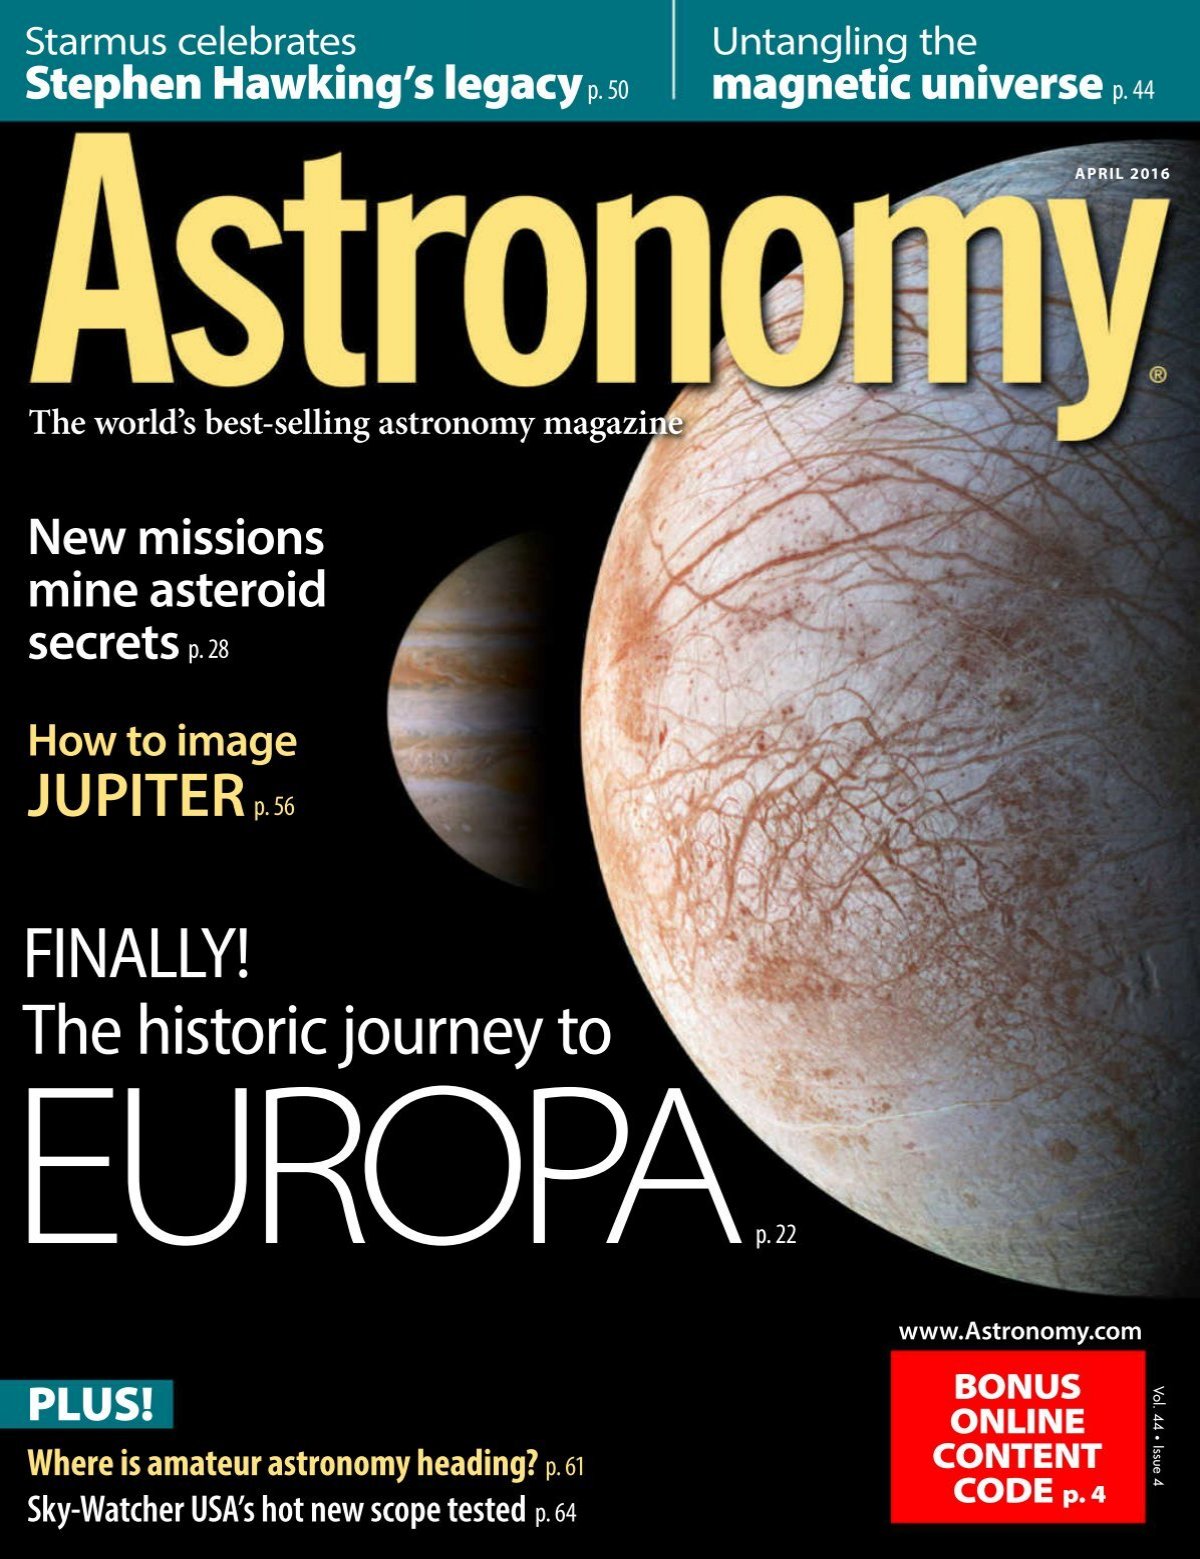 amateur astronomy cambridge encyclopedia